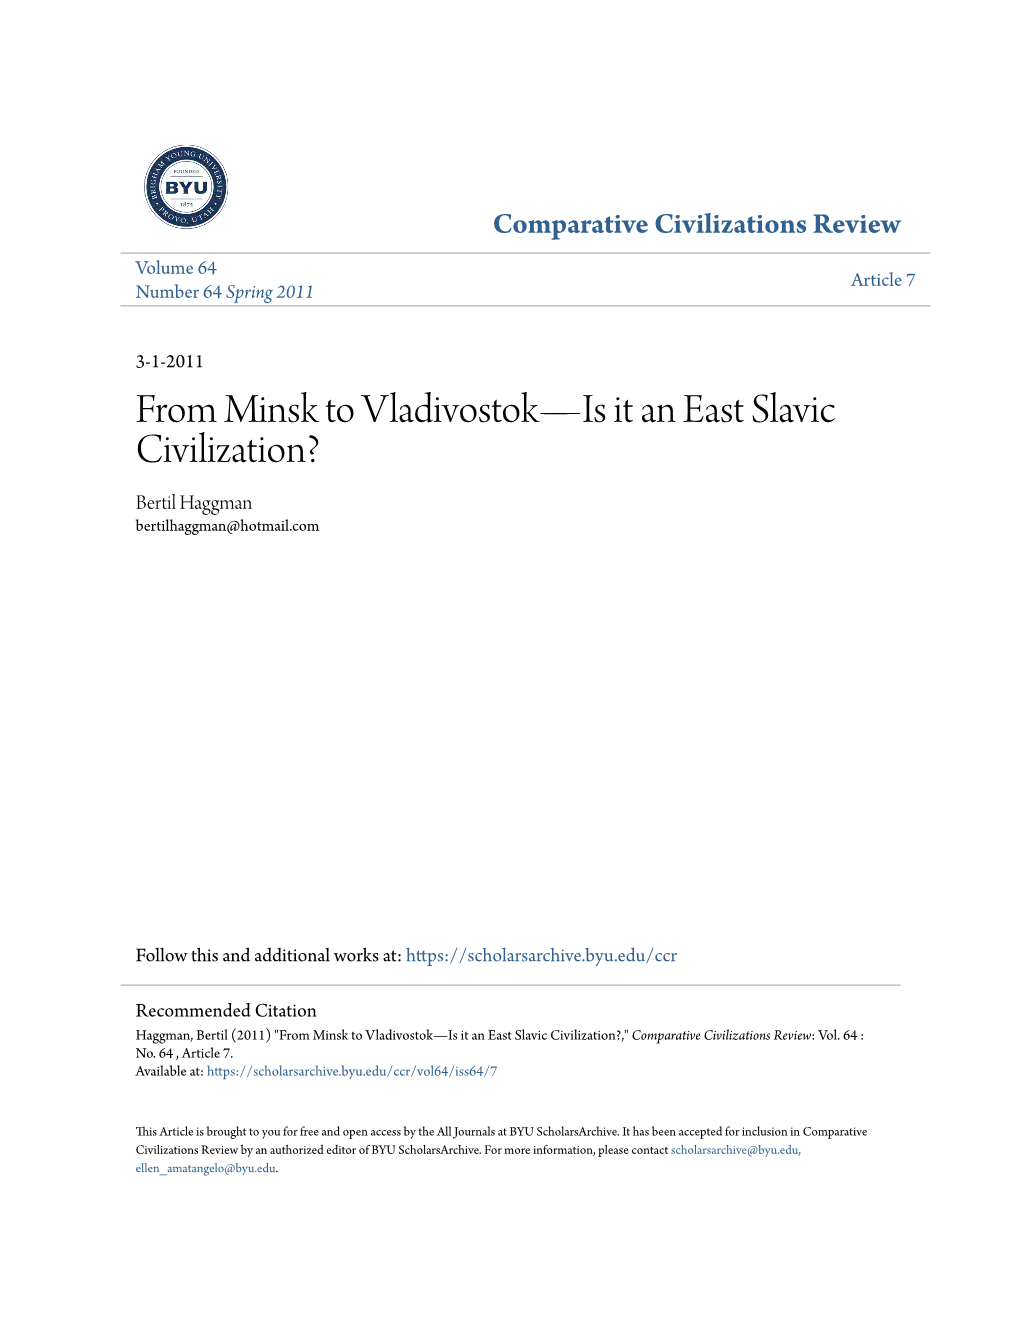 From Minsk to Vladivostok—Is It an East Slavic Civilization? Bertil Haggman Bertilhaggman@Hotmail.Com